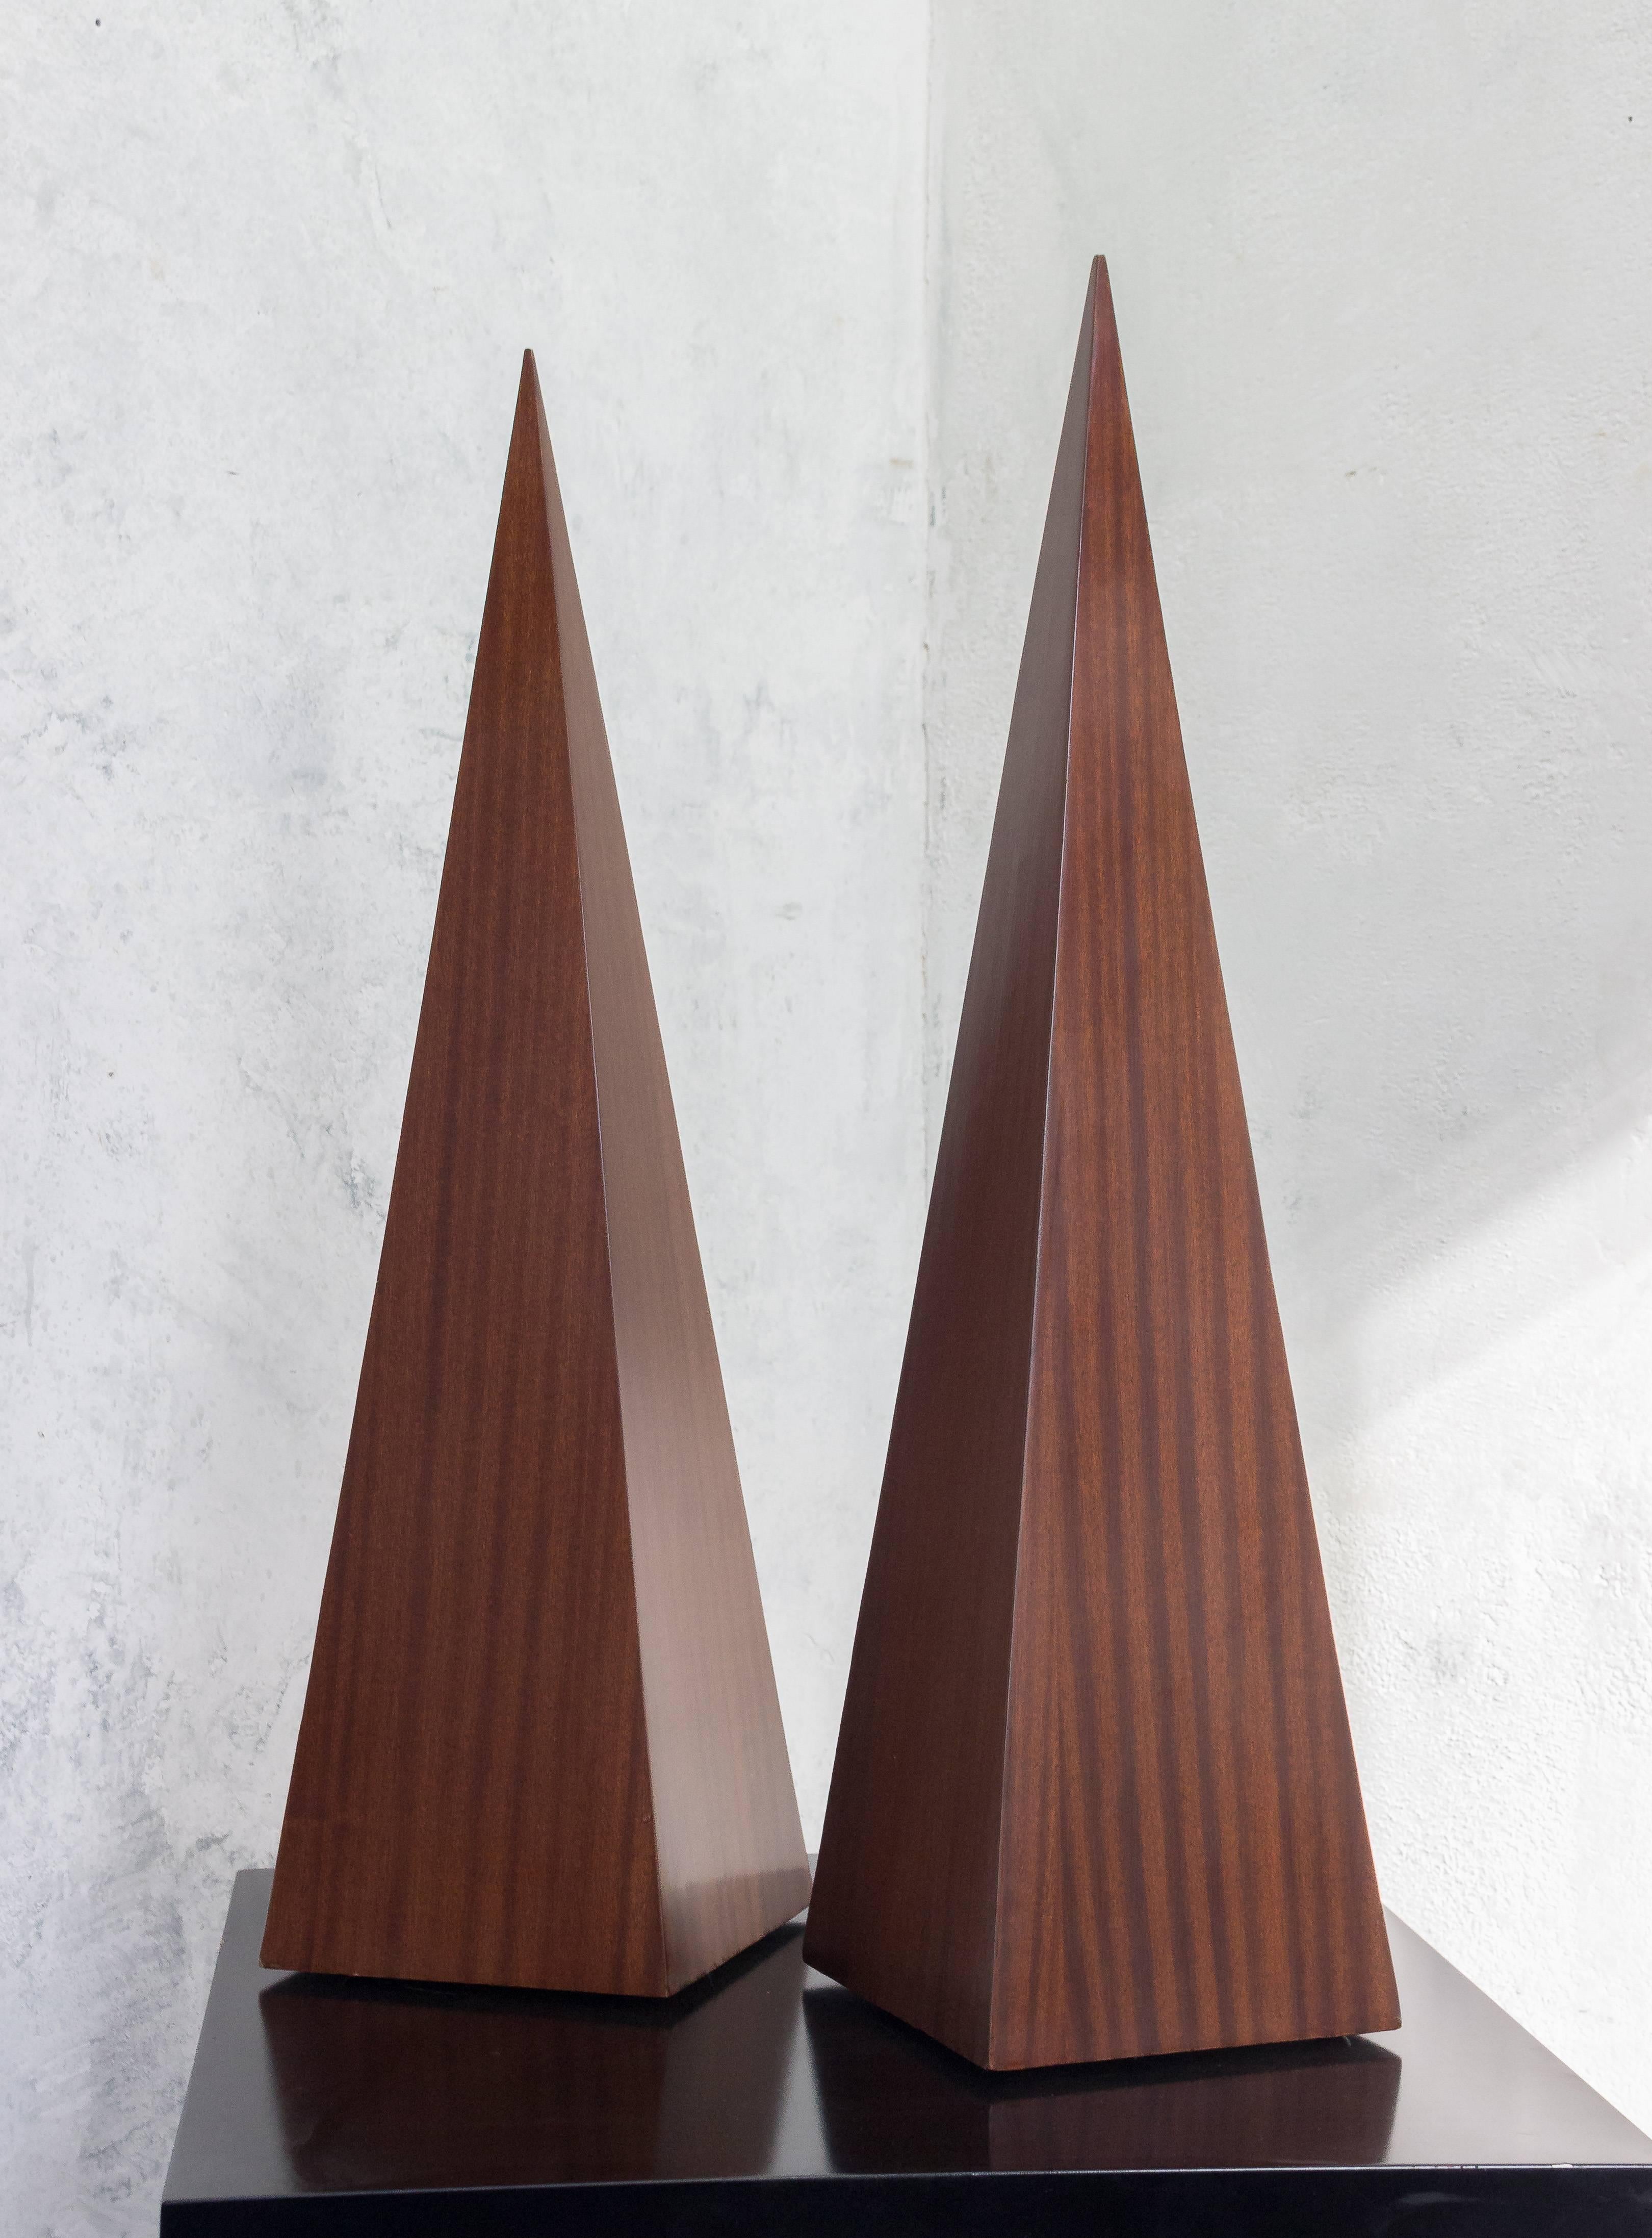 Pair of mahogany veneered obelisks. 1940s.

Ref #: D1105-02

Dimensions: 29